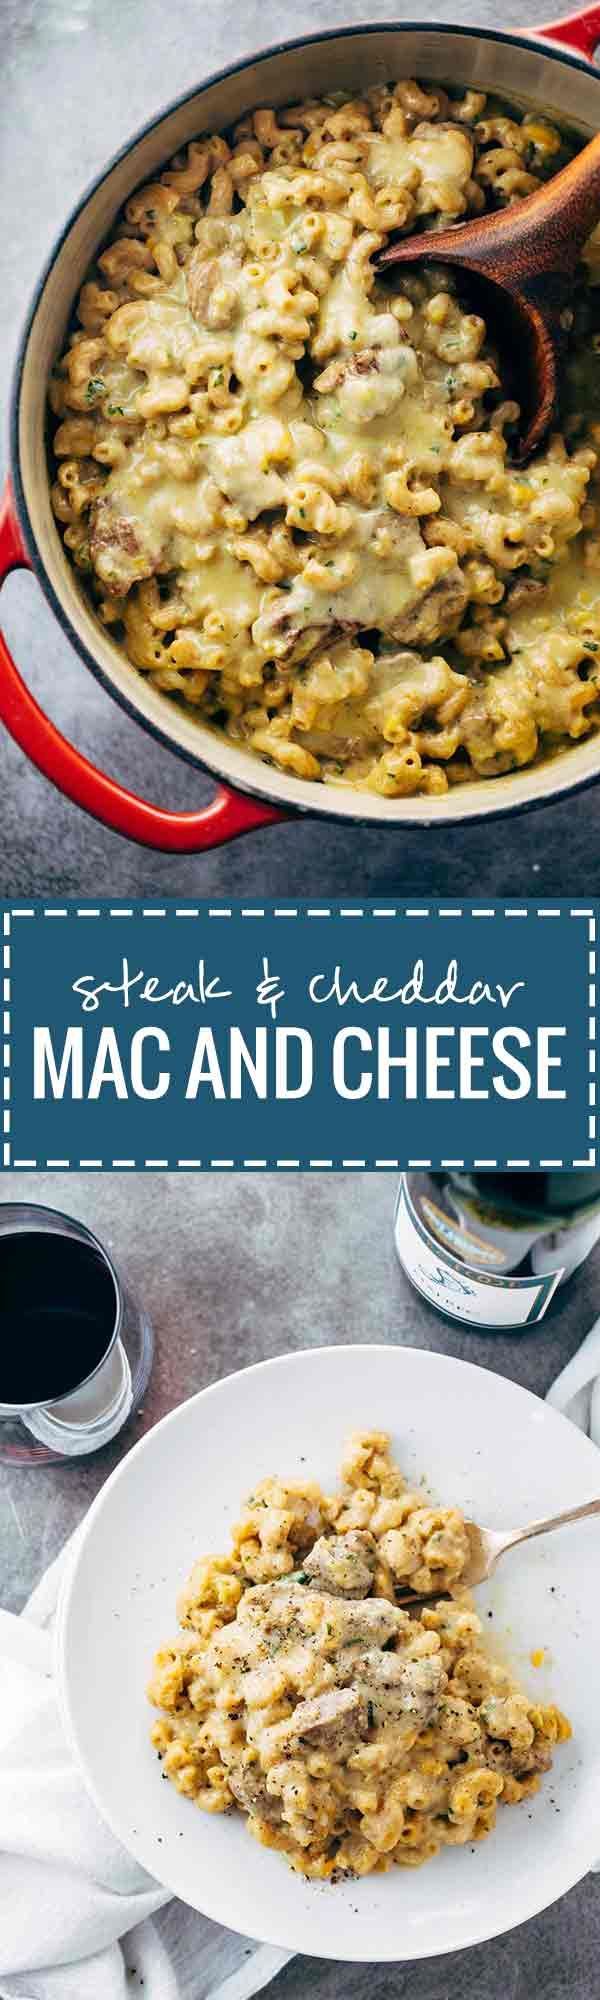 Homemade mac and cheese